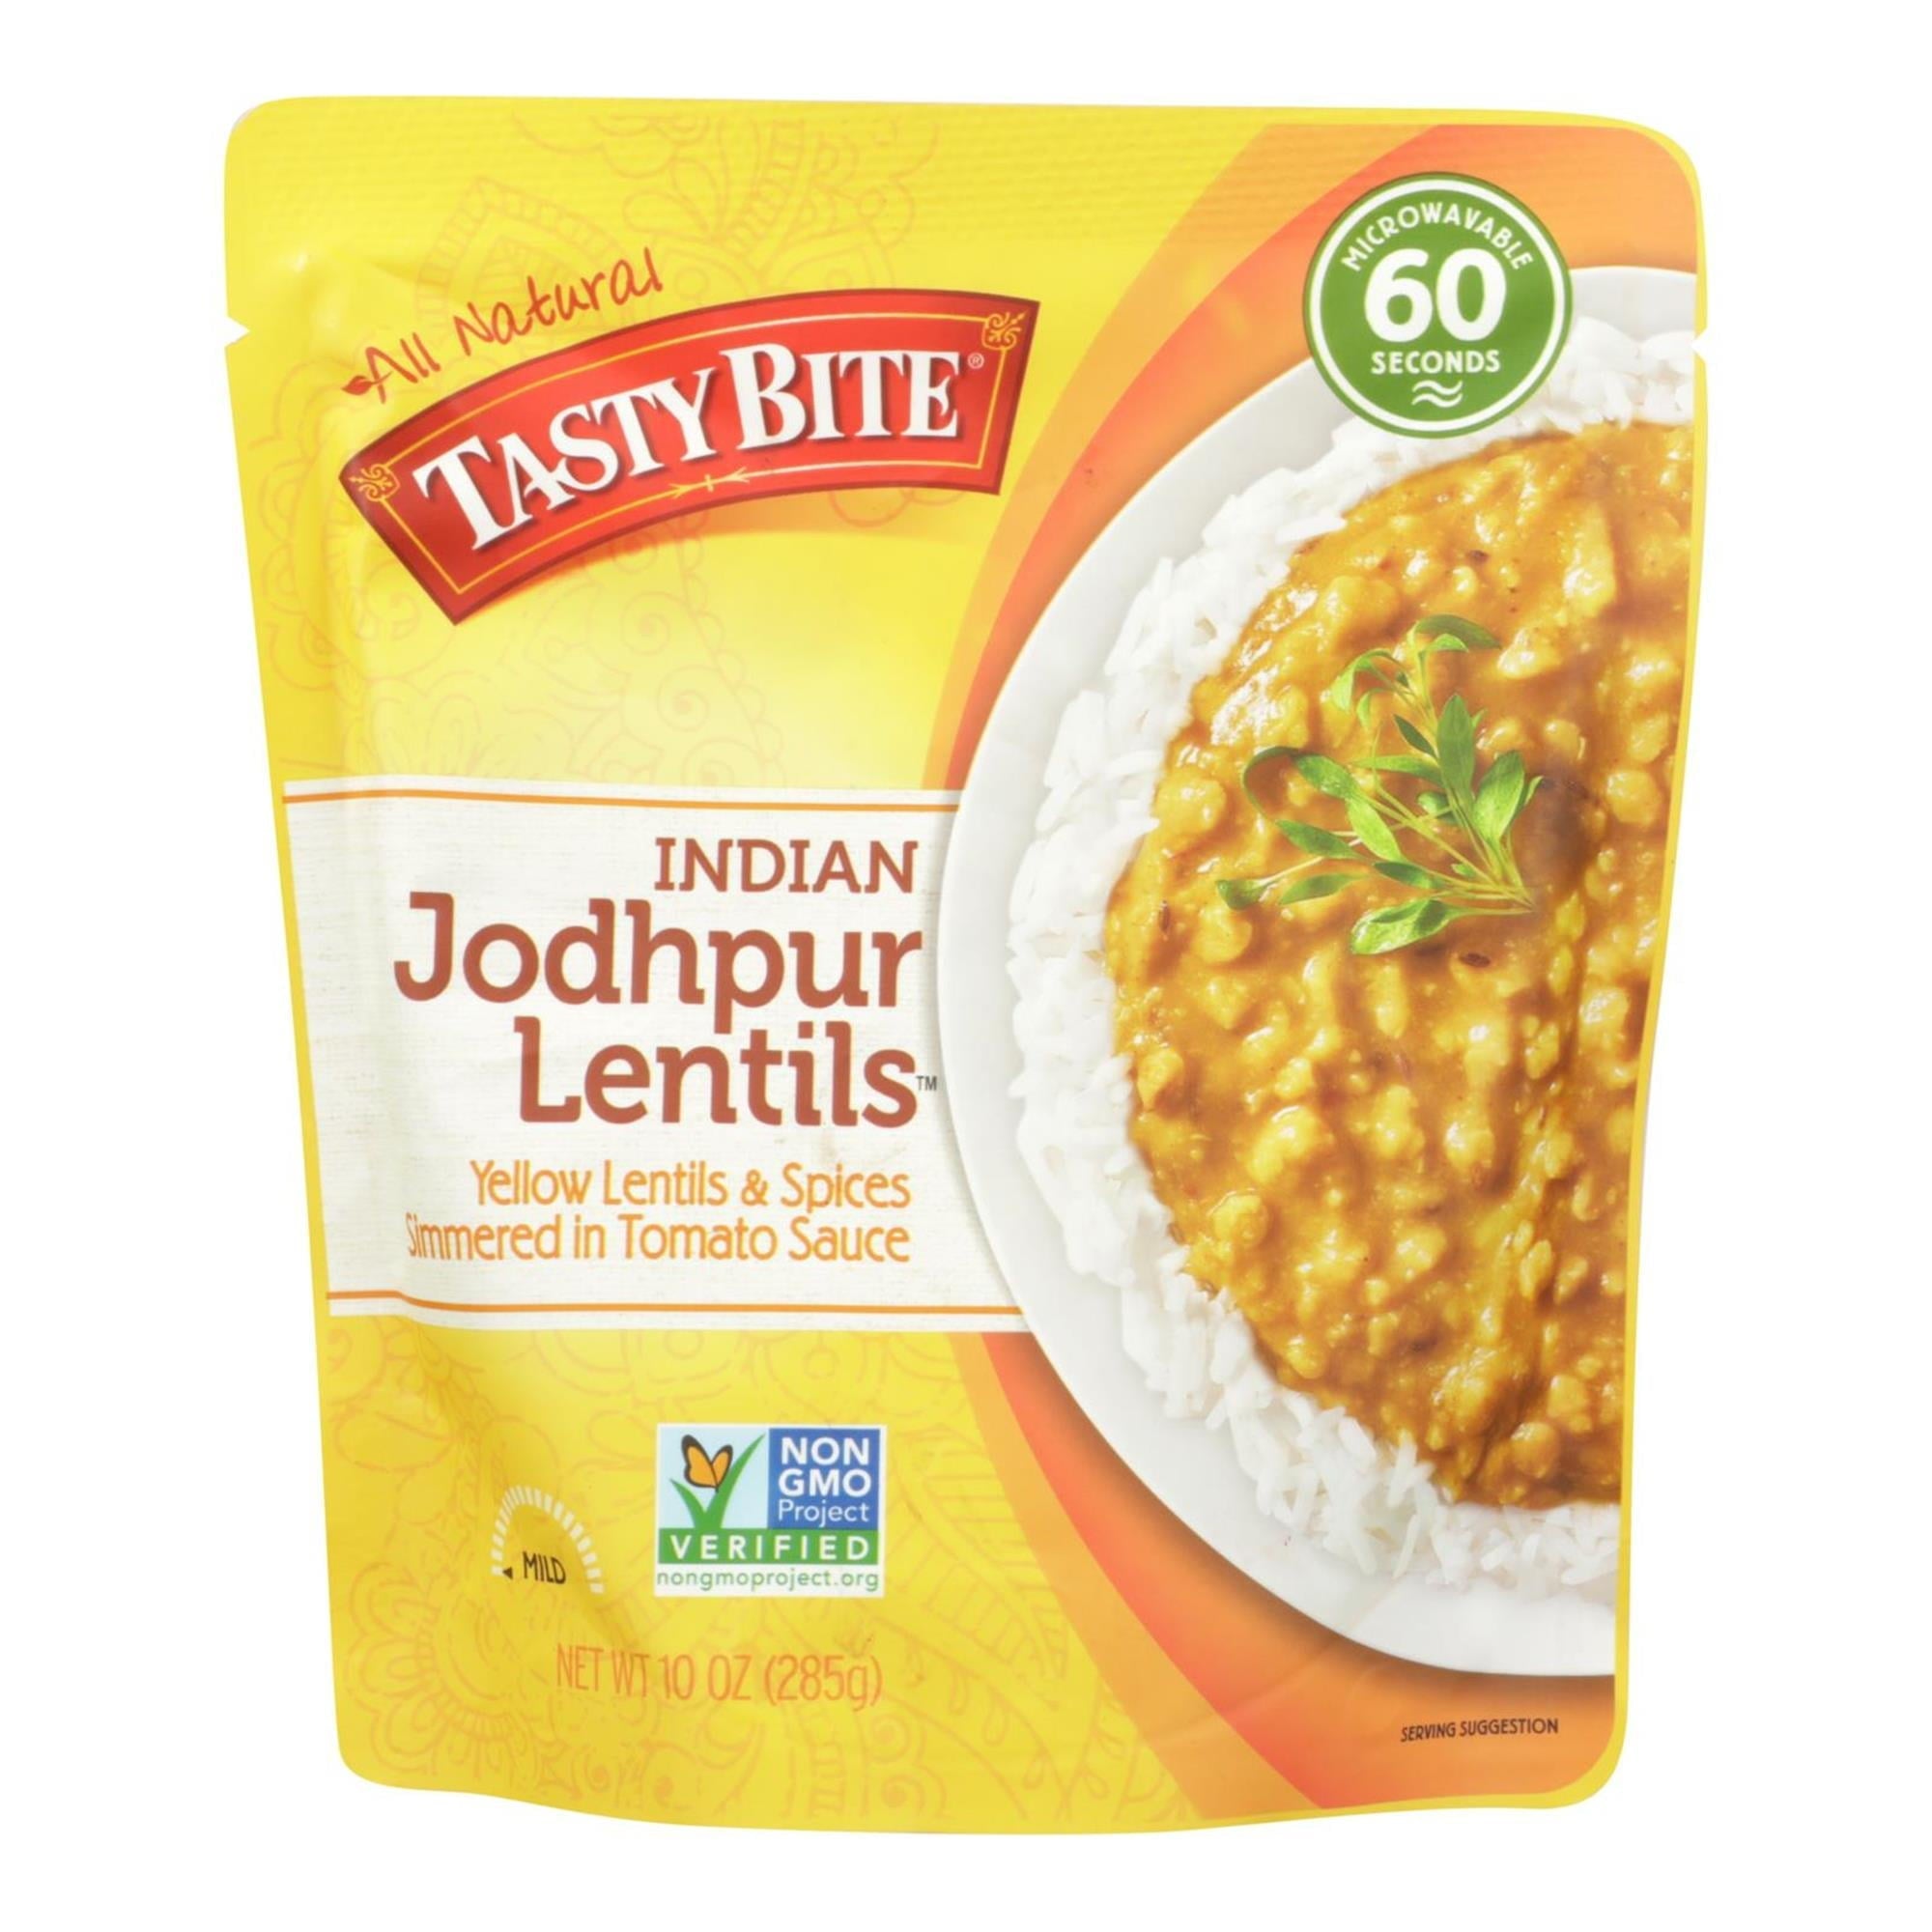 Tasty Bite Jodhpur Lentils Indian Cuisine 10oz